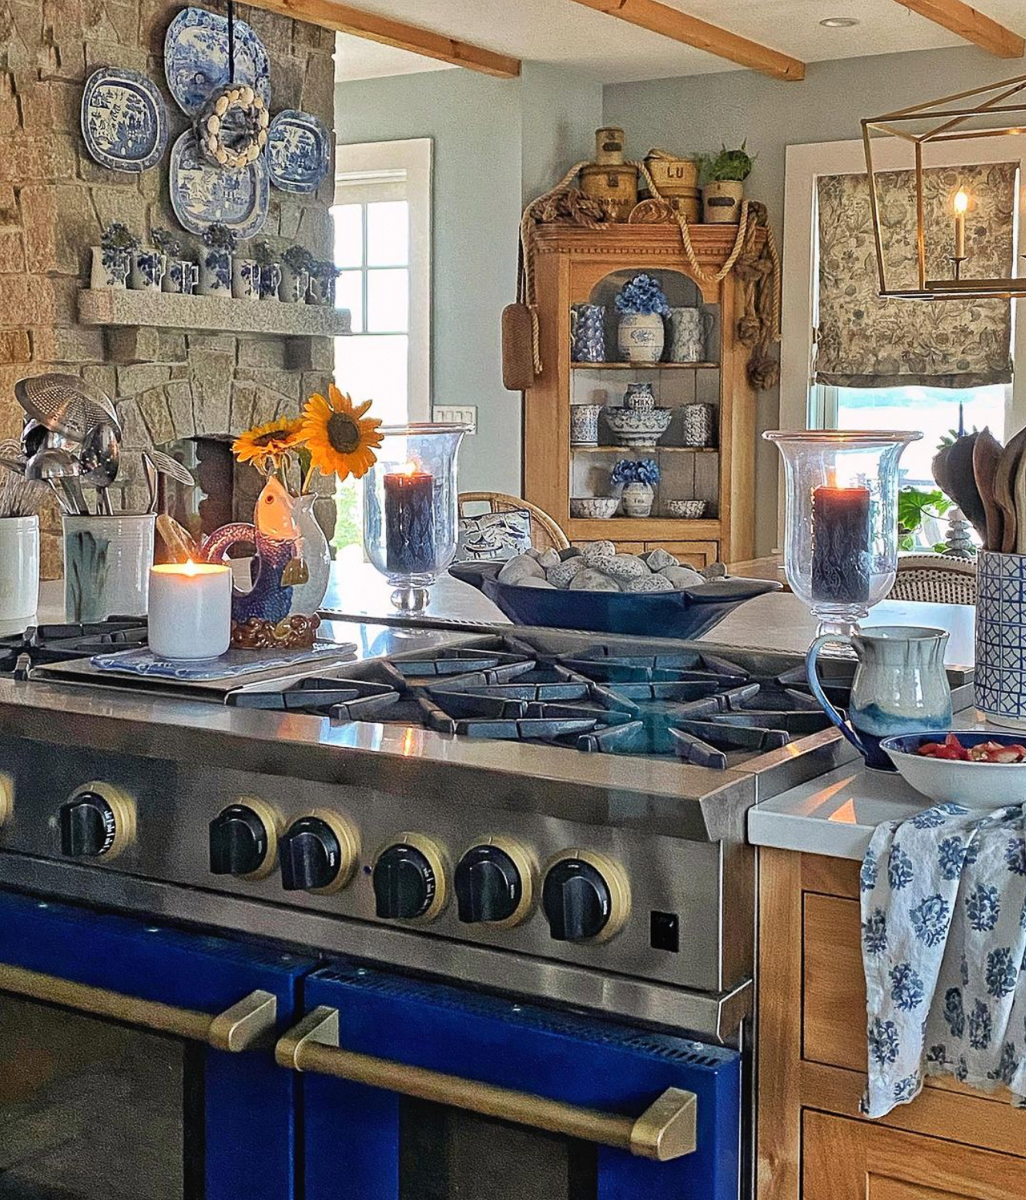 Beautiful blue stove in this classic coastal kitchen kellyelko.com